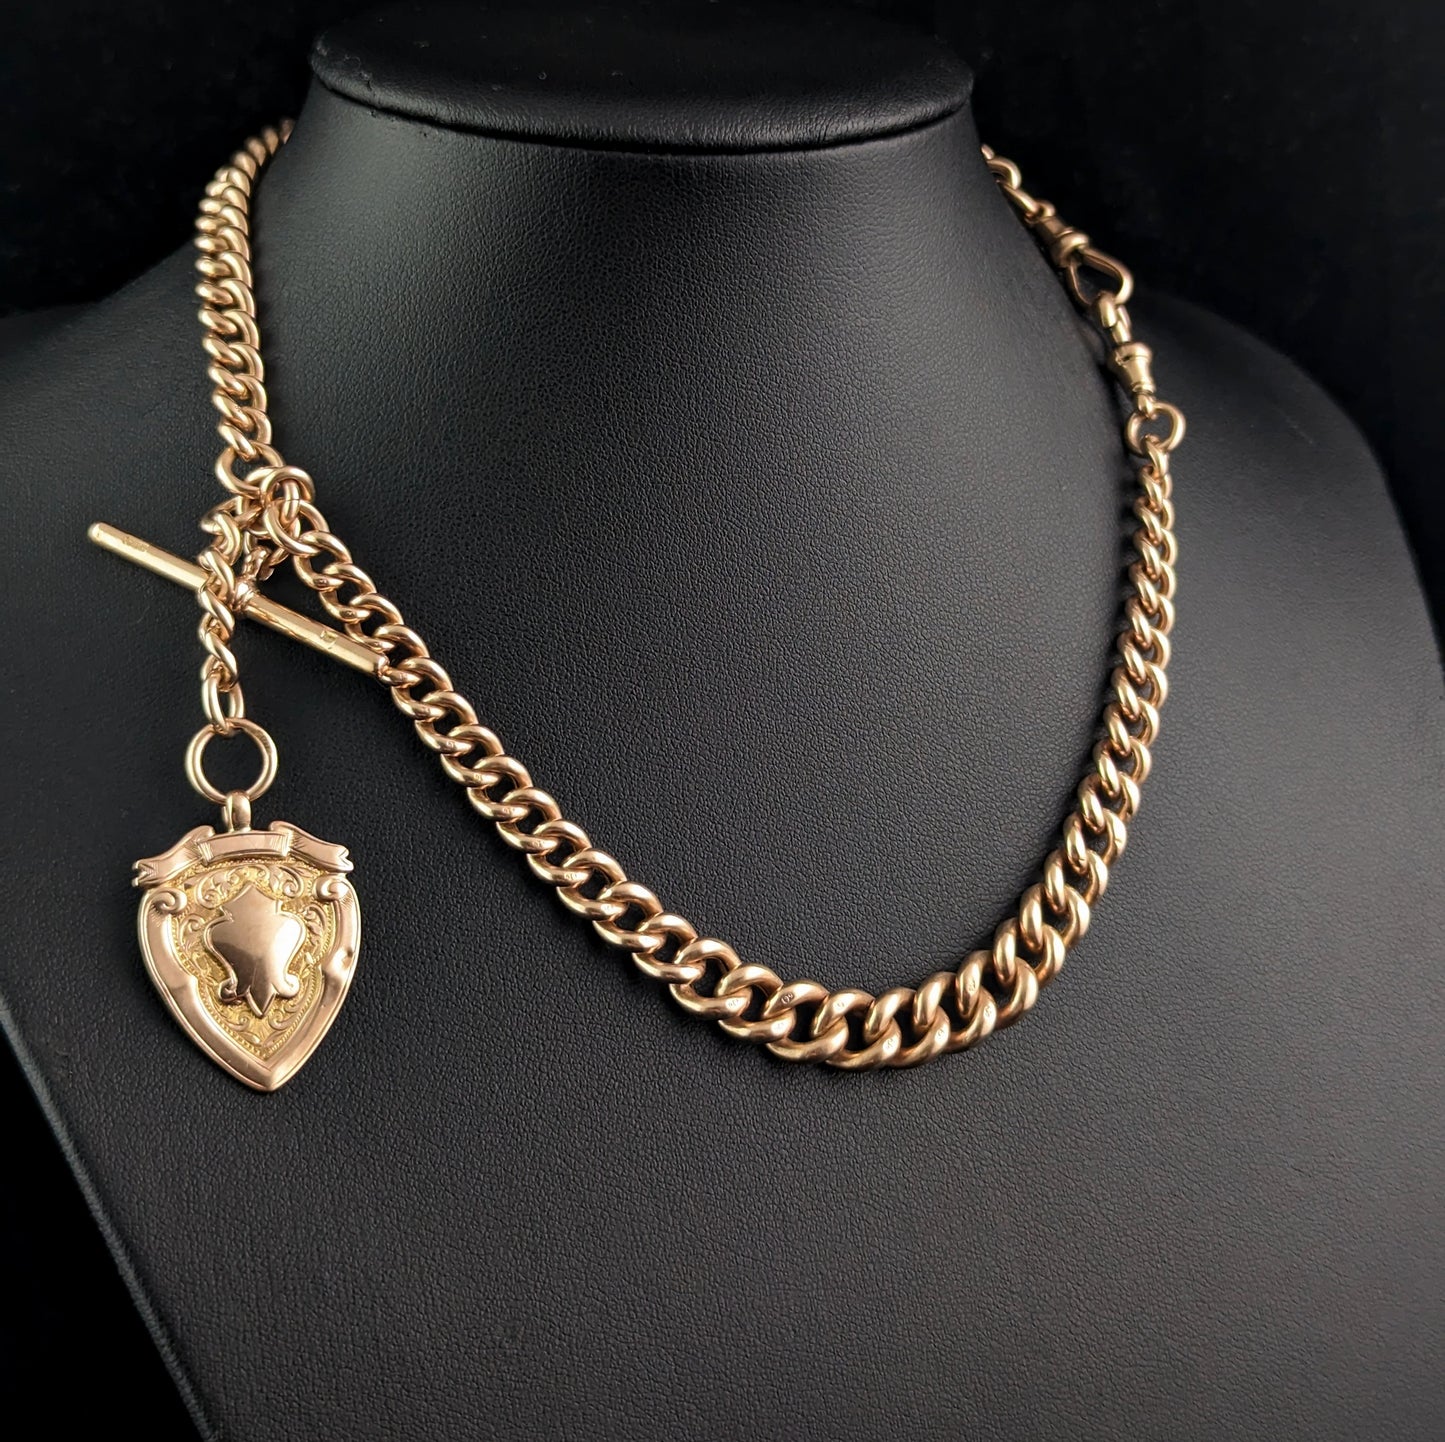 Vintage Art Deco 9ct rose gold Albert chain, shield fob